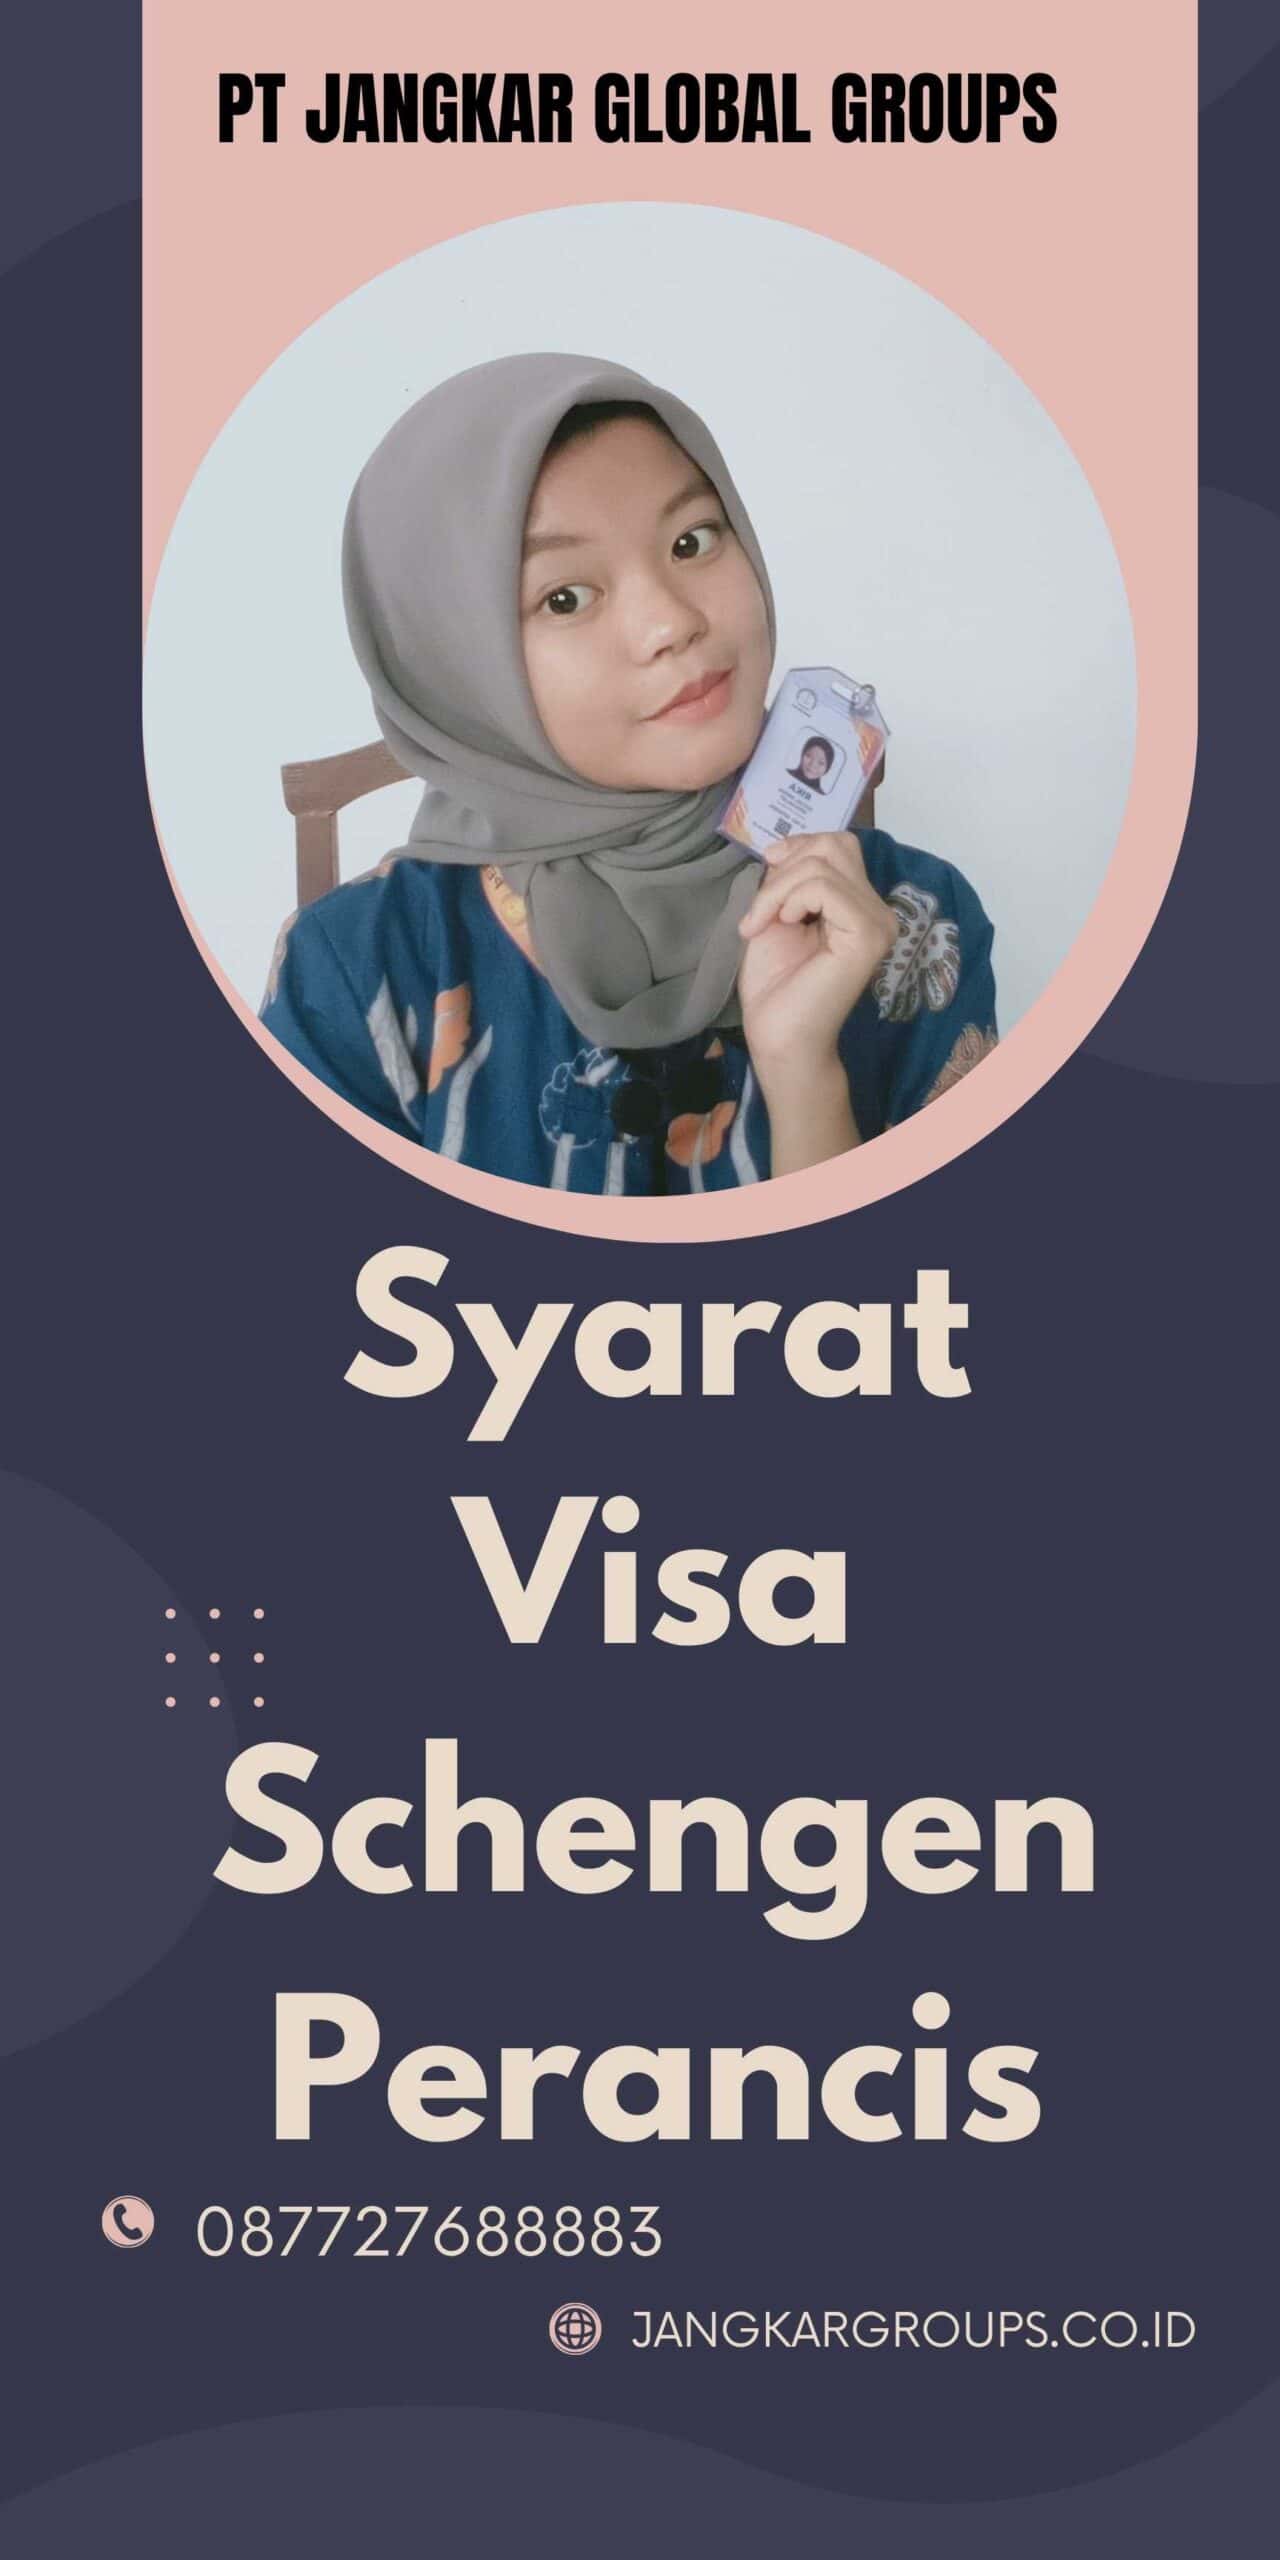 Syarat Visa Schengen Perancis